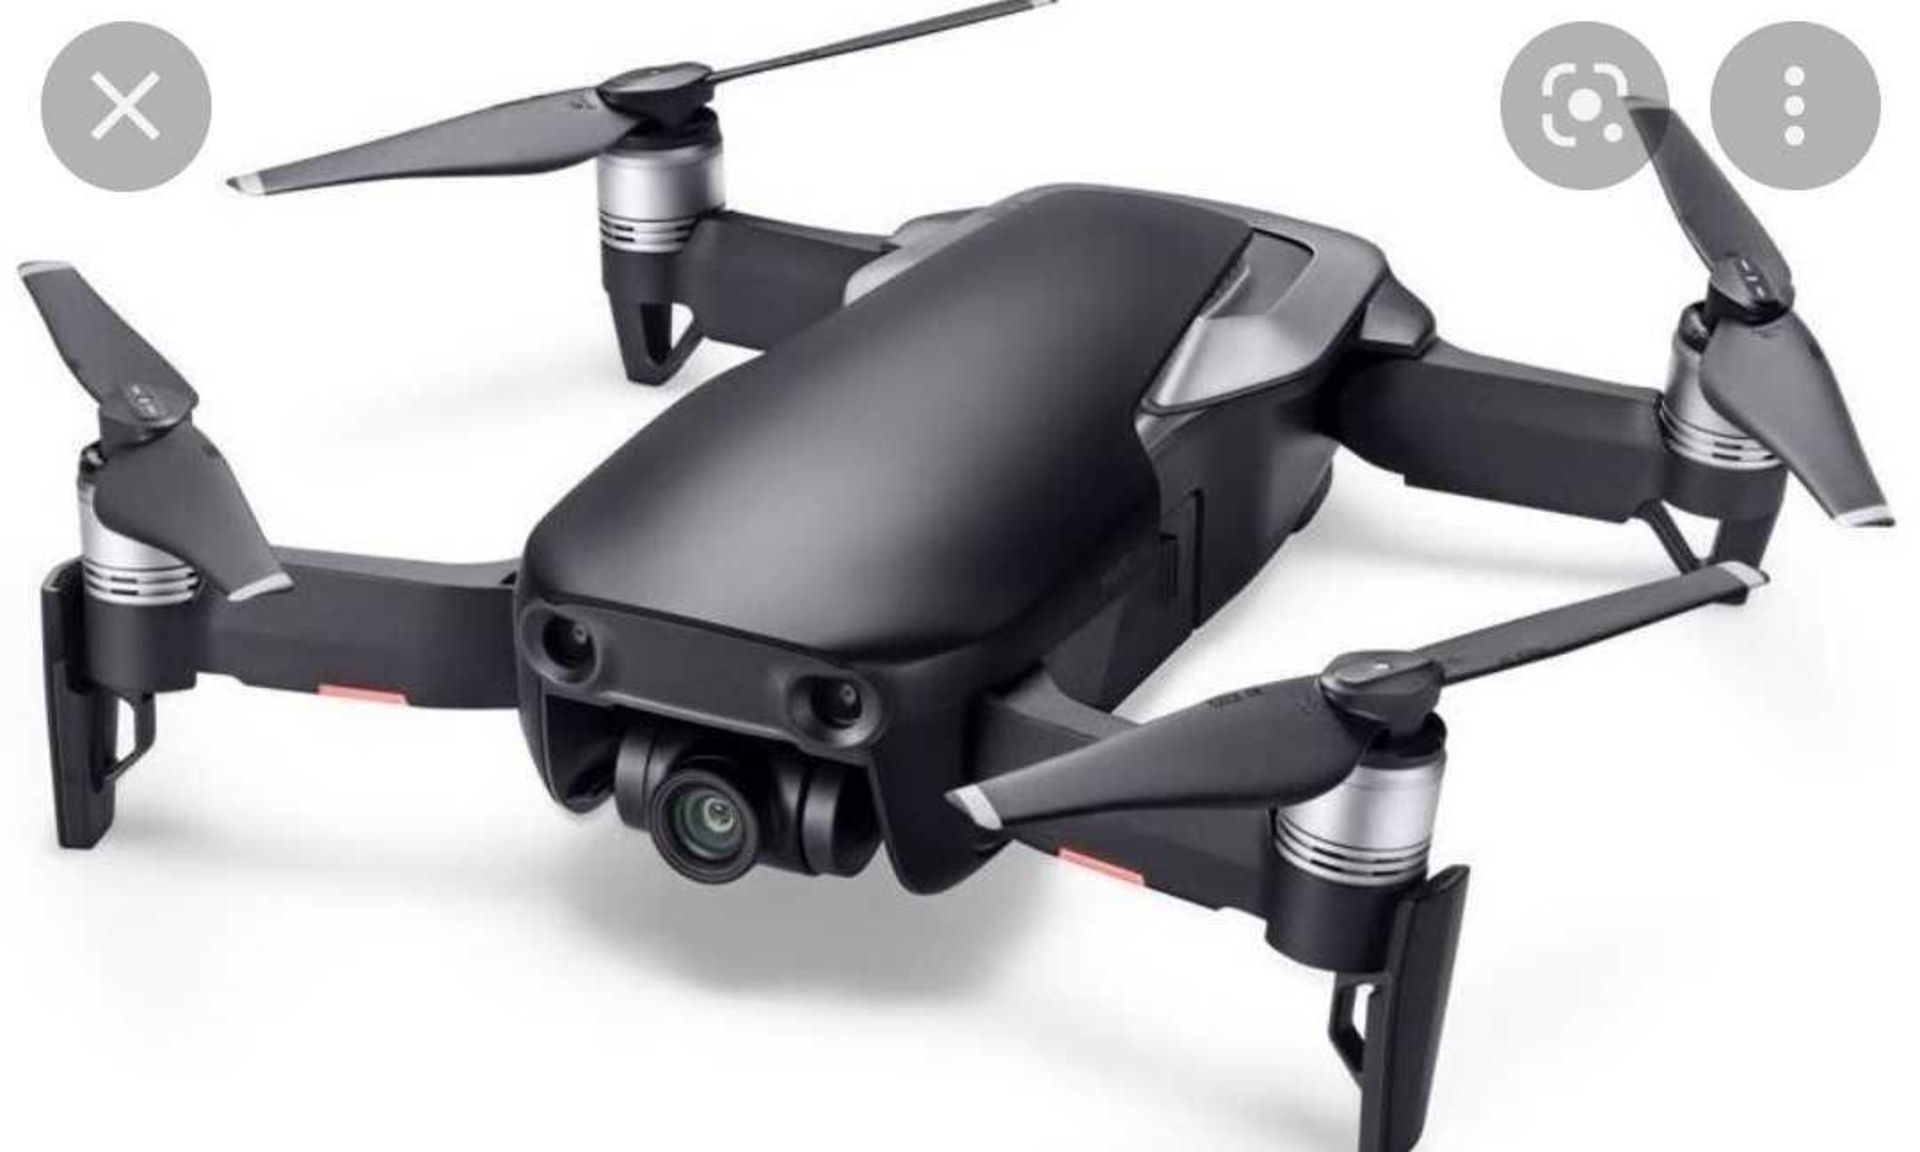 RRP £100 Lot To Contain 2 Boxed Dji Mavic Air Part 17 Replica Drones